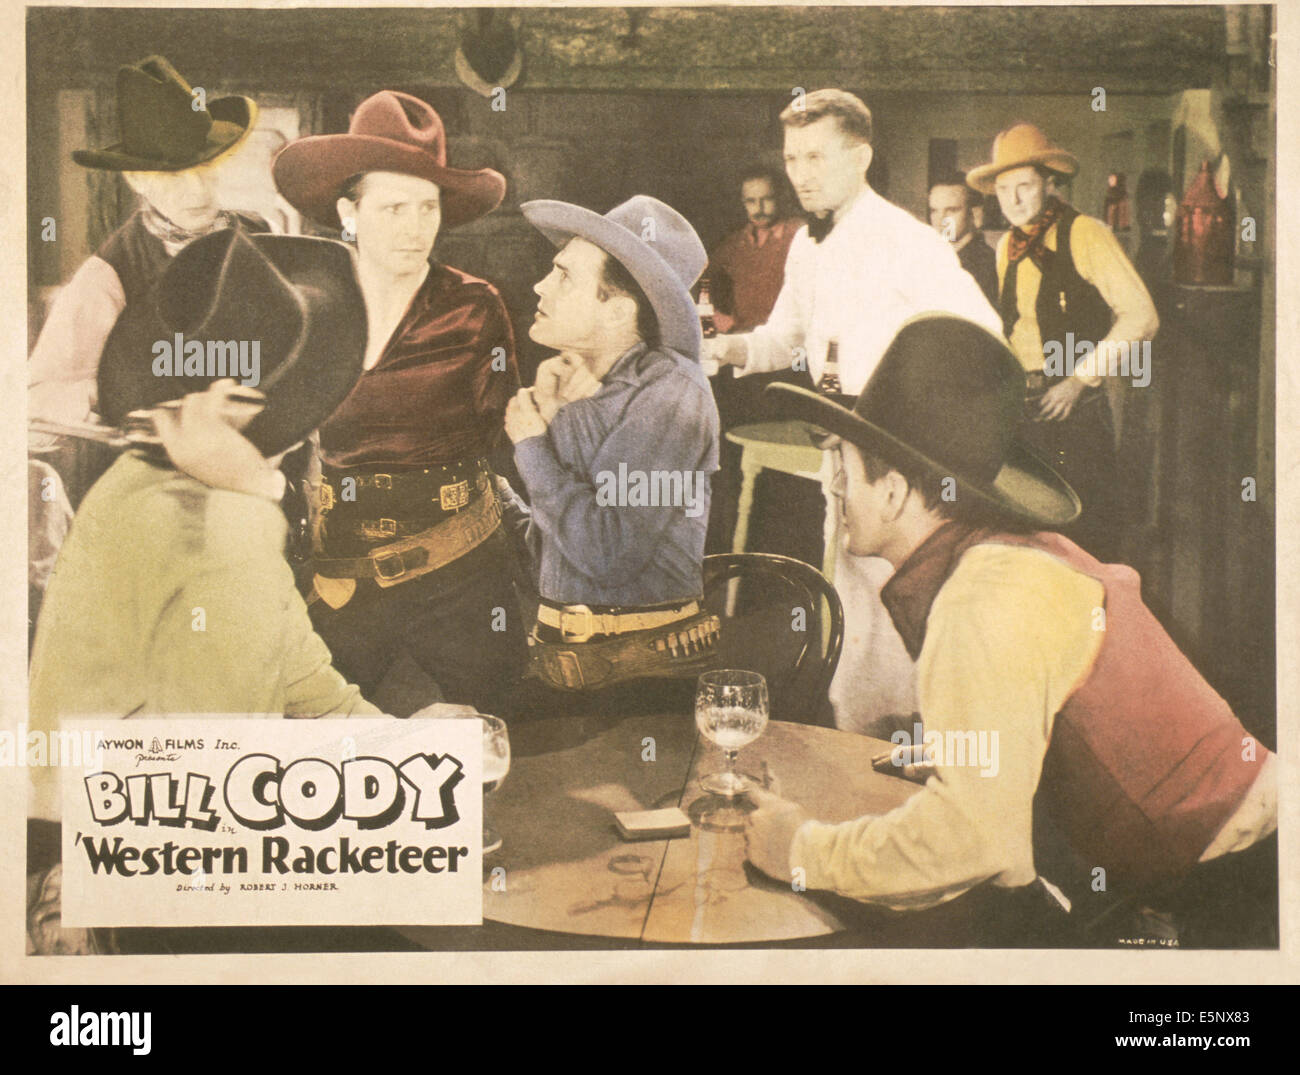 WESTERN RACKETEERS, US lobbycard, Bill Cody (grabbing shirt), 1934 Stock Photo